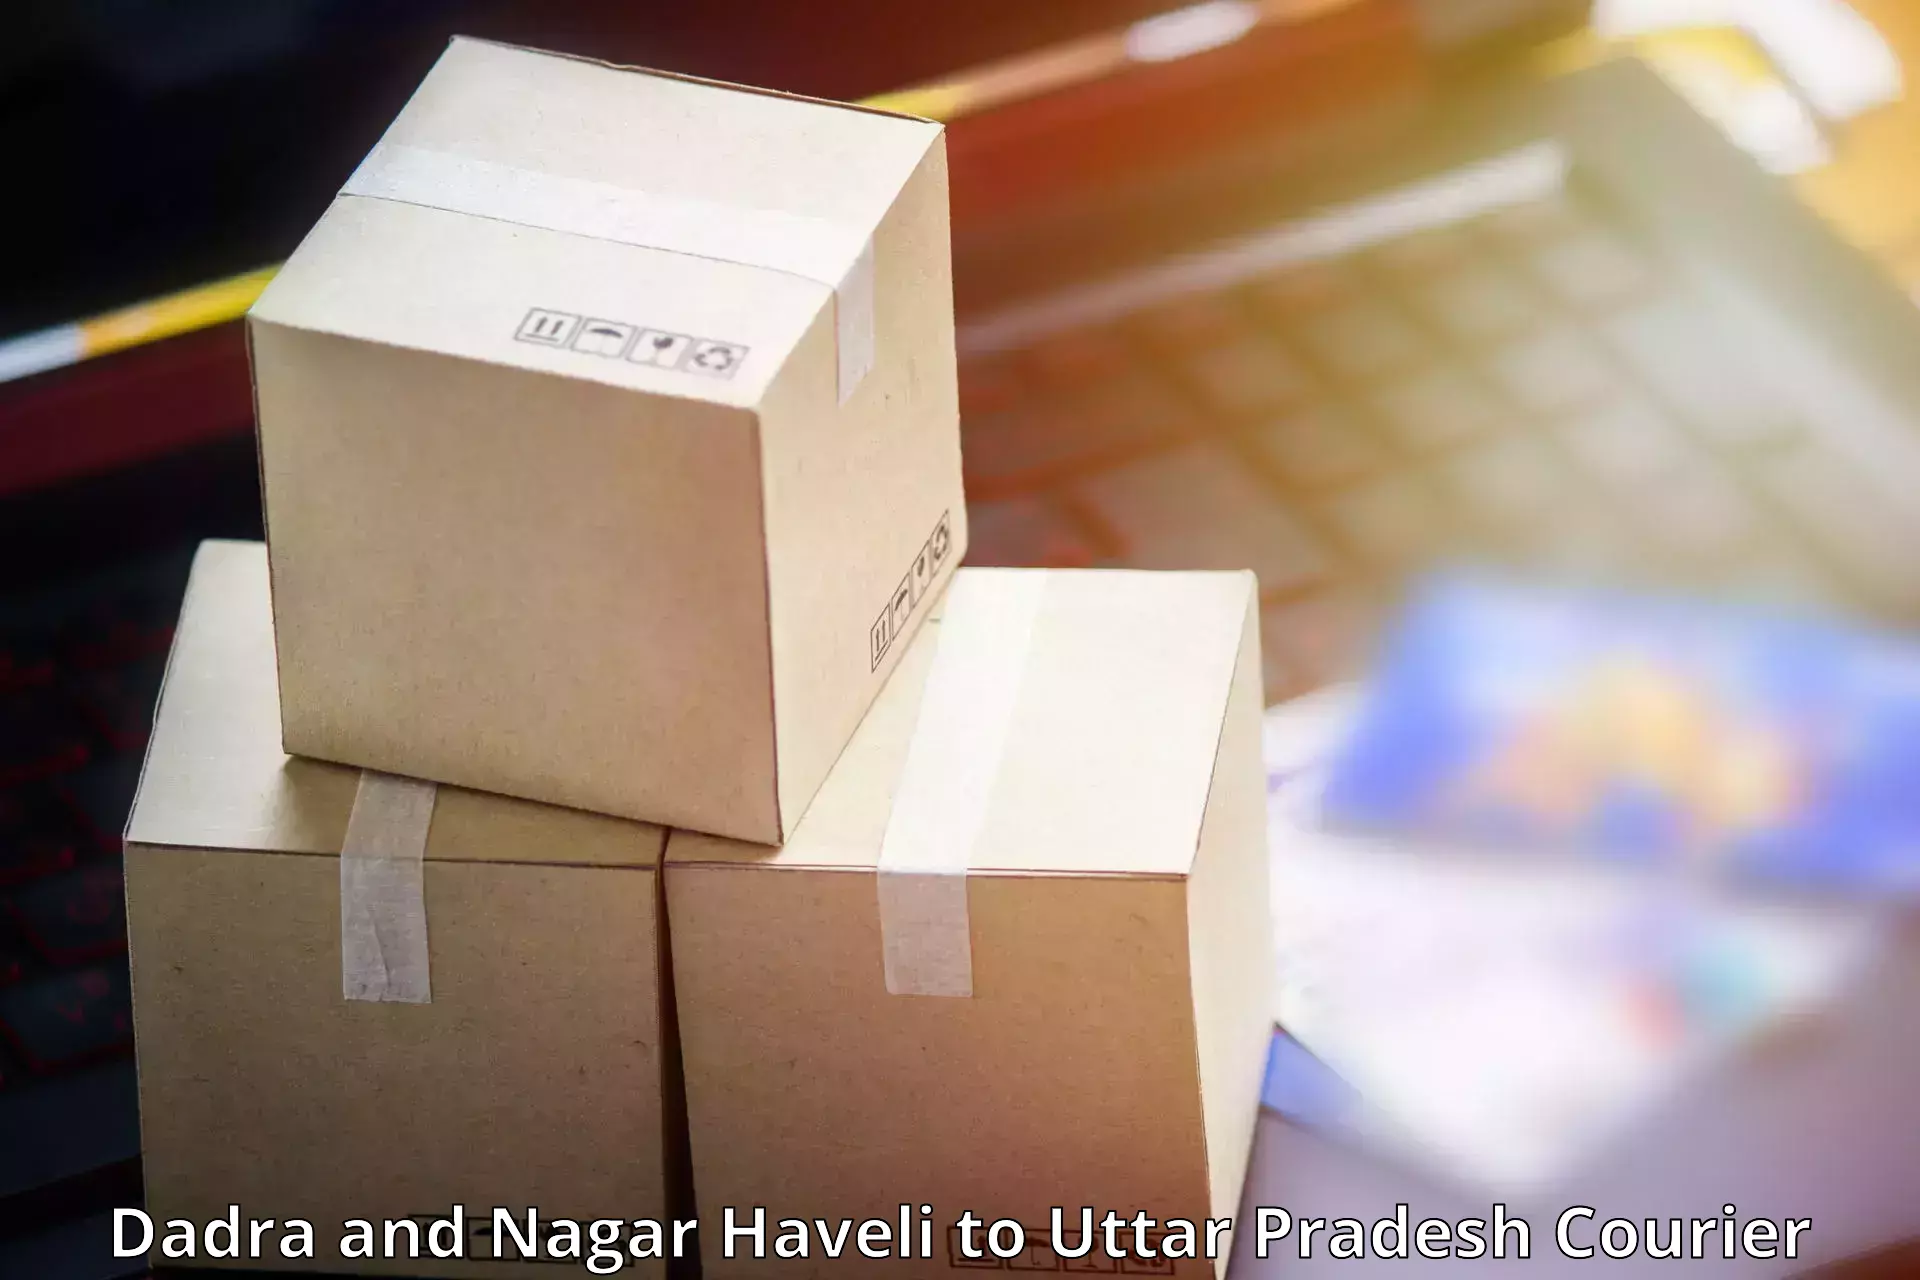 Reliable courier service Dadra and Nagar Haveli to Kuru